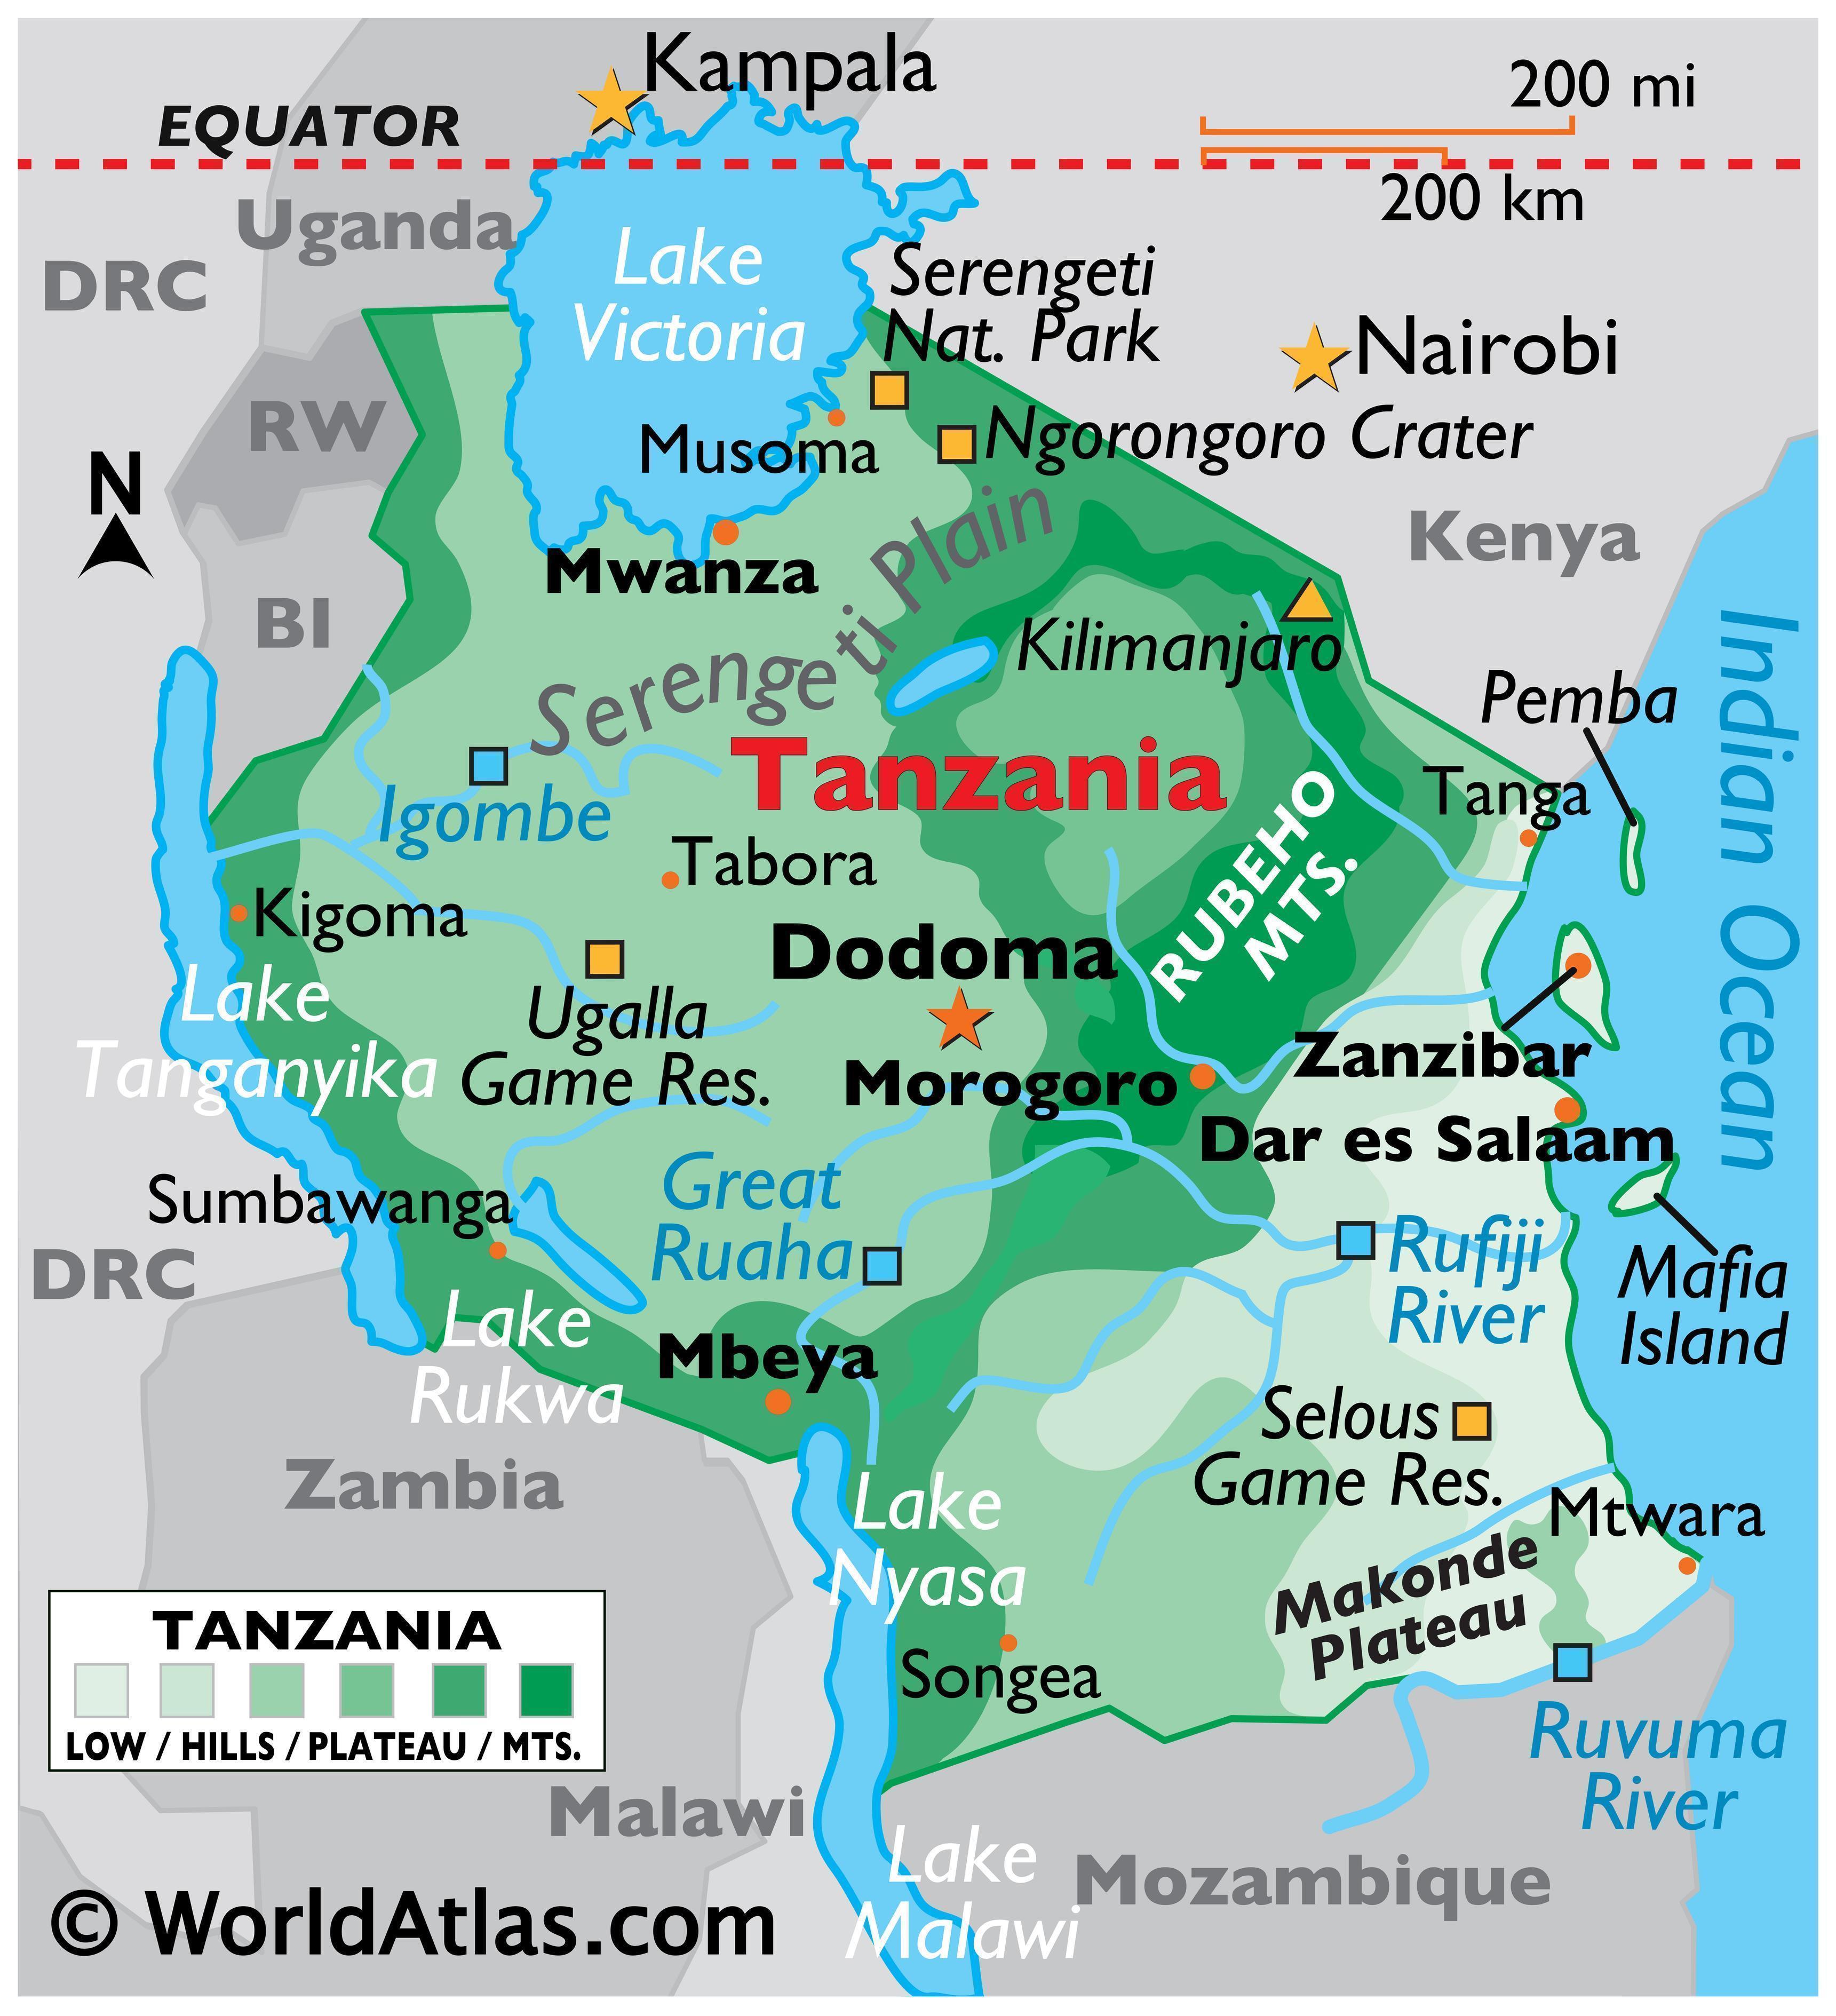 Tanzania Latitude Longitude Absolute And Relative Locations World Atlas